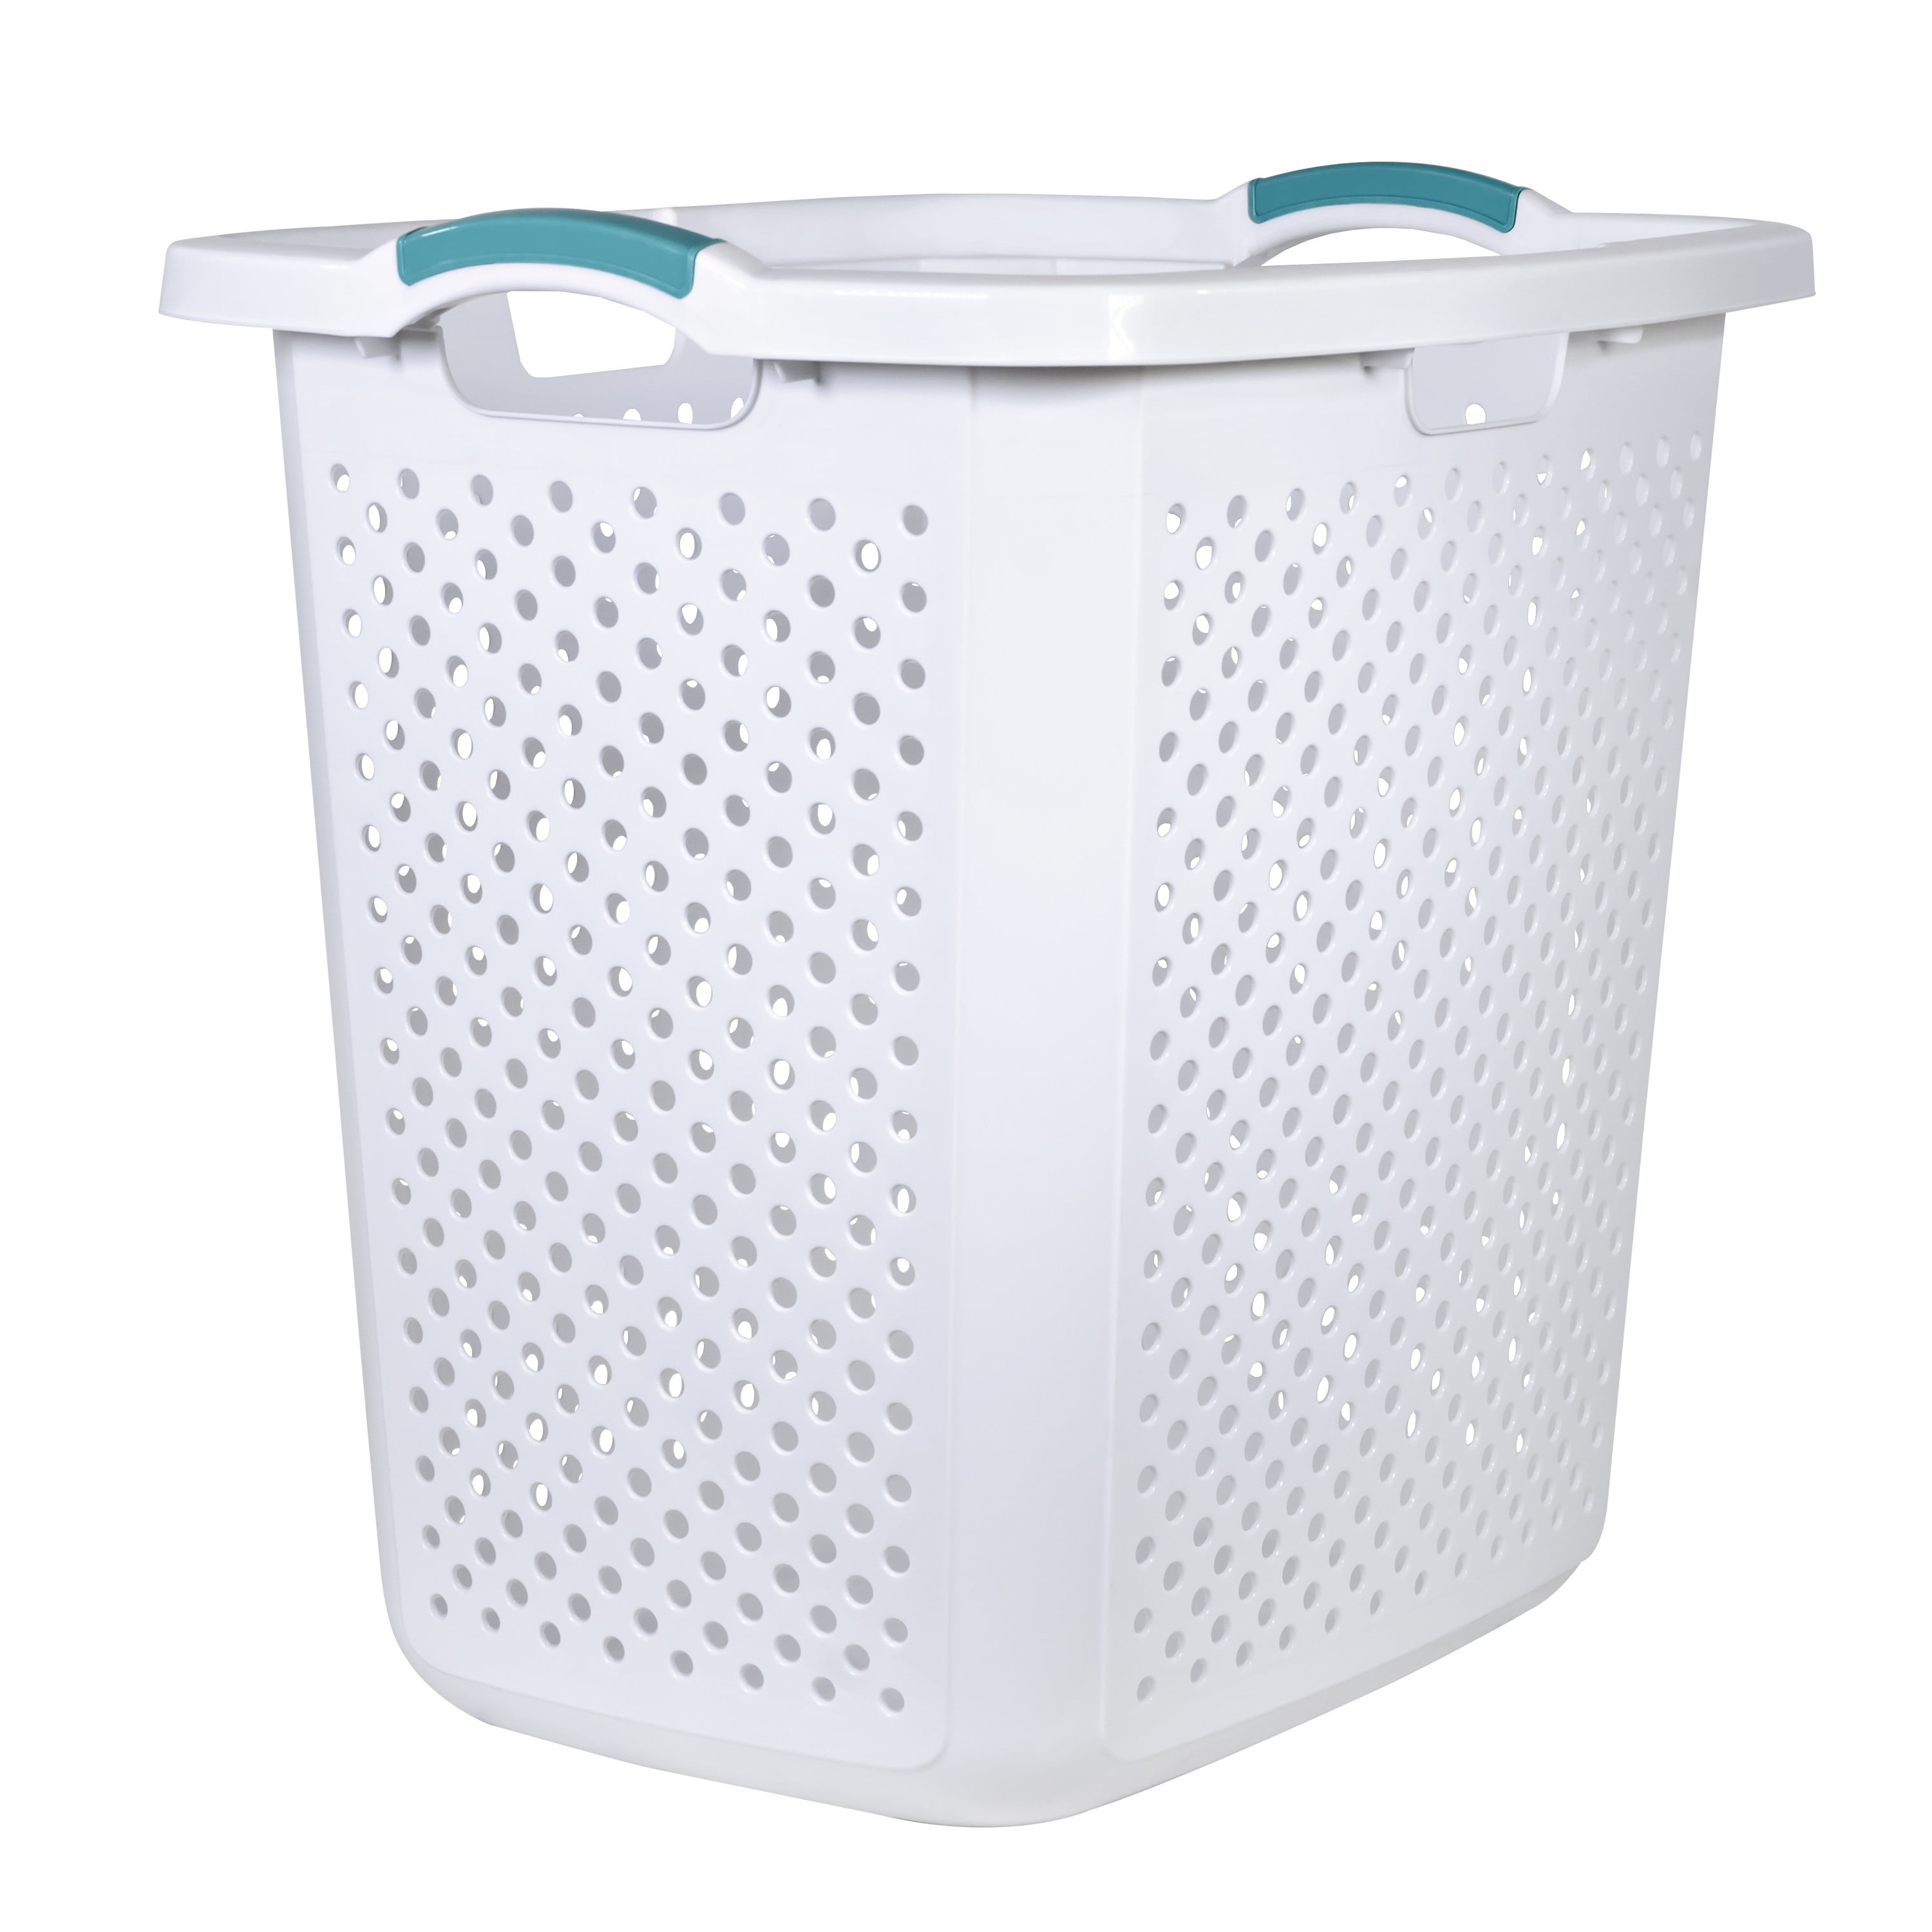 30 Litre Round Laundry Basket White Washing Clothes Carrying Storage Holding 